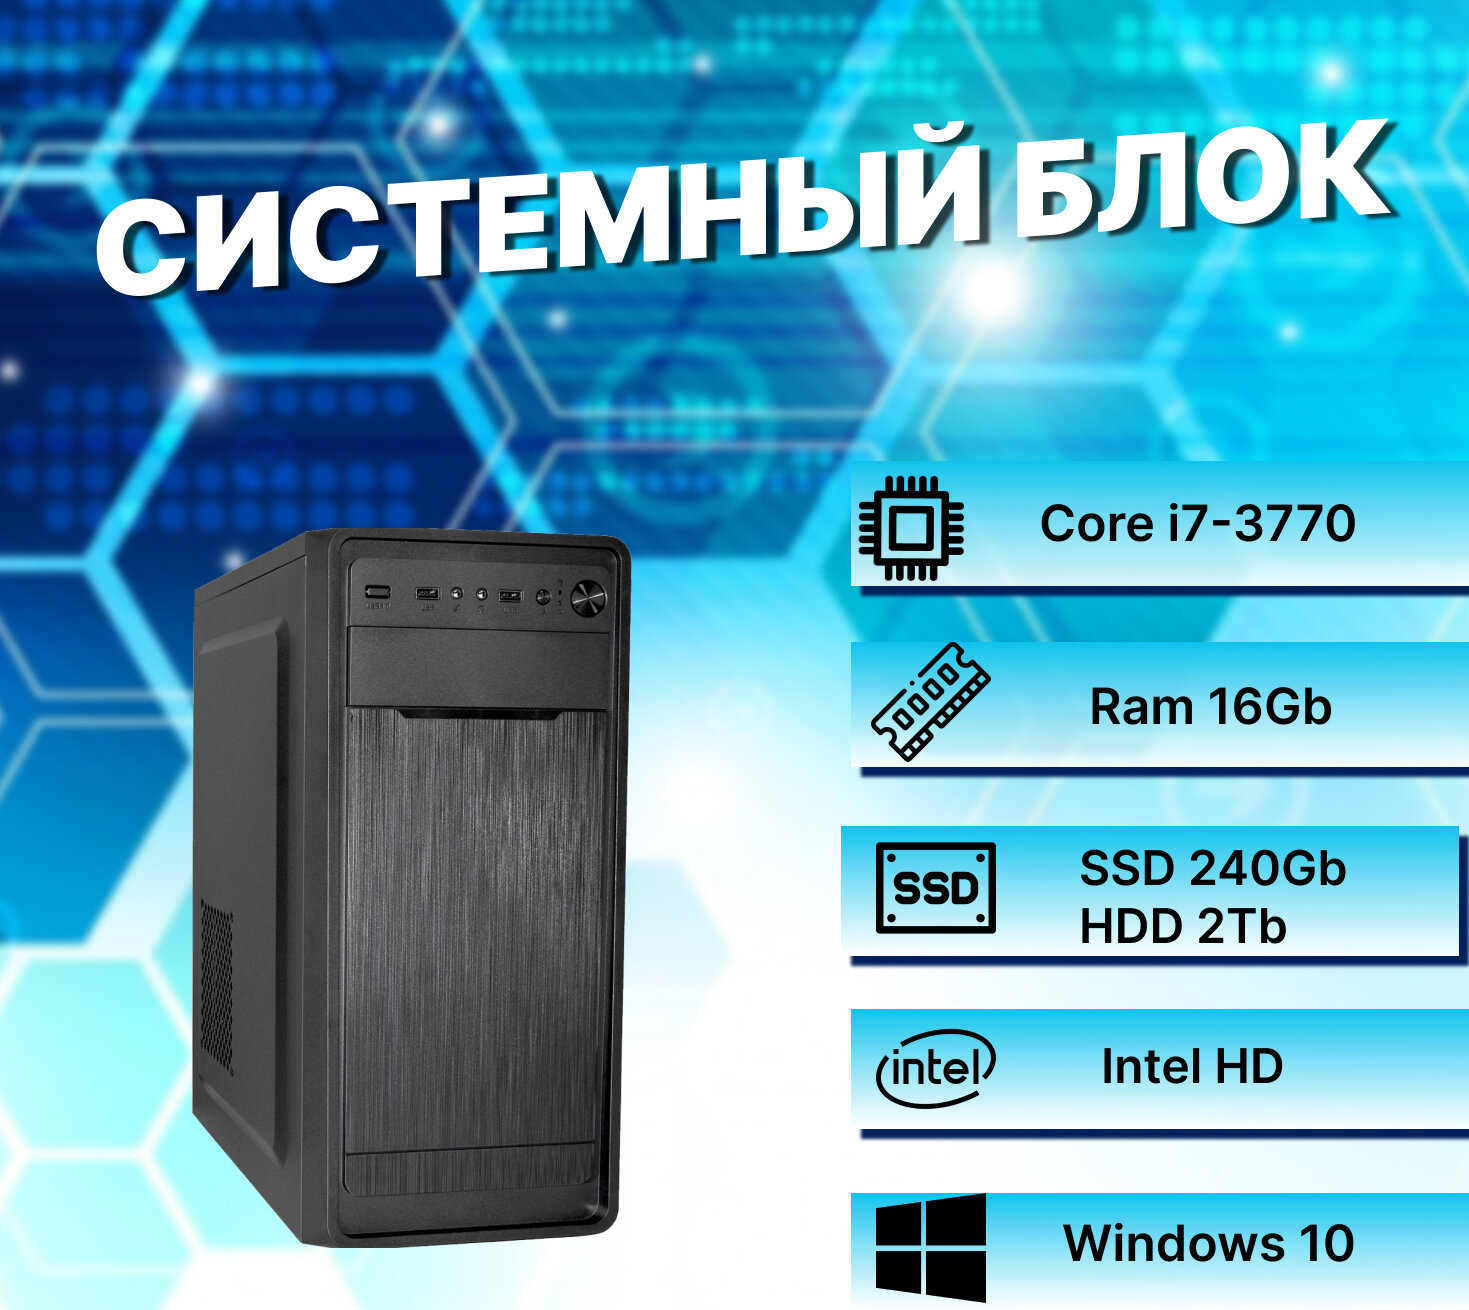 Системный блок Intel Core I7-3770 (3.4ГГц)/ RAM 16Gb/ SSD 240Gb/ HDD 2Tb/ Intel HD/ Windows 10 Pro